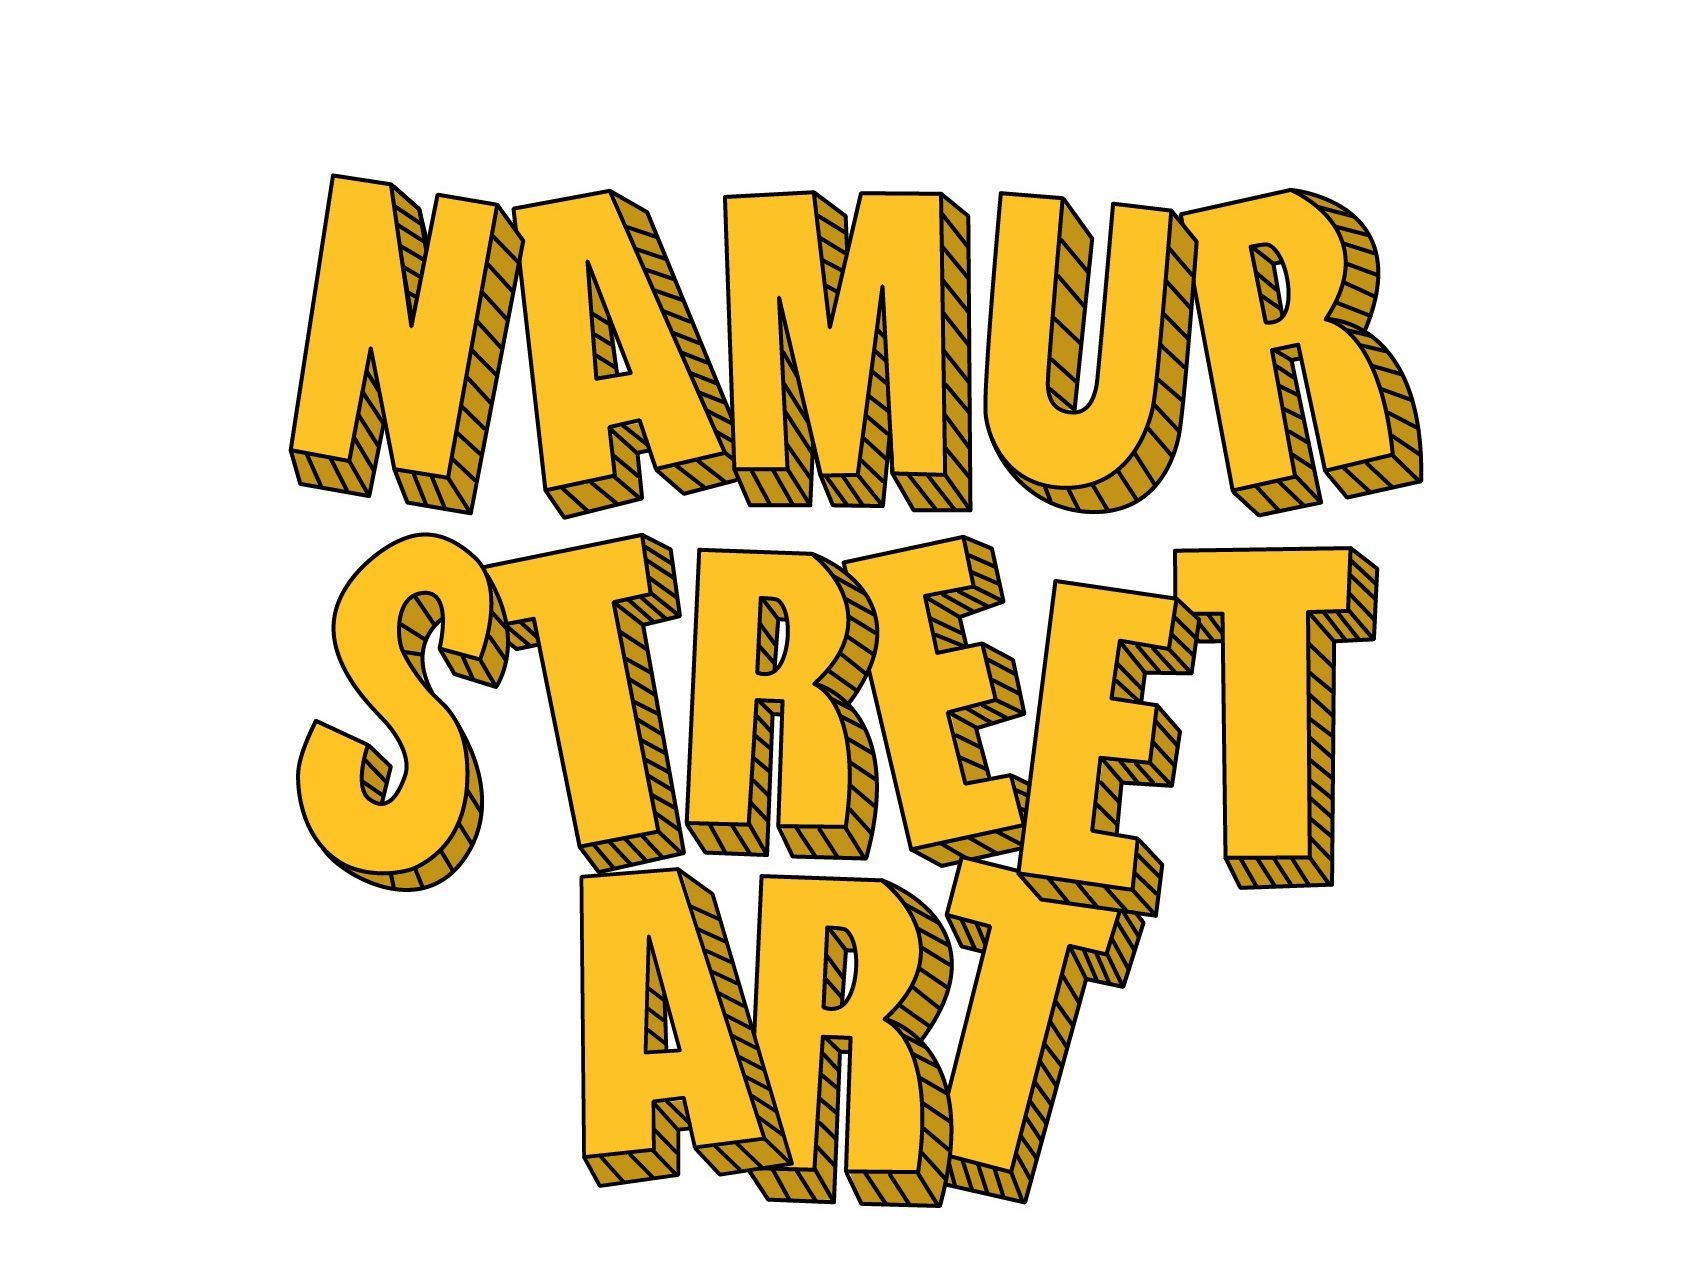 Logo-Namur-Street-Art-edited.jpg